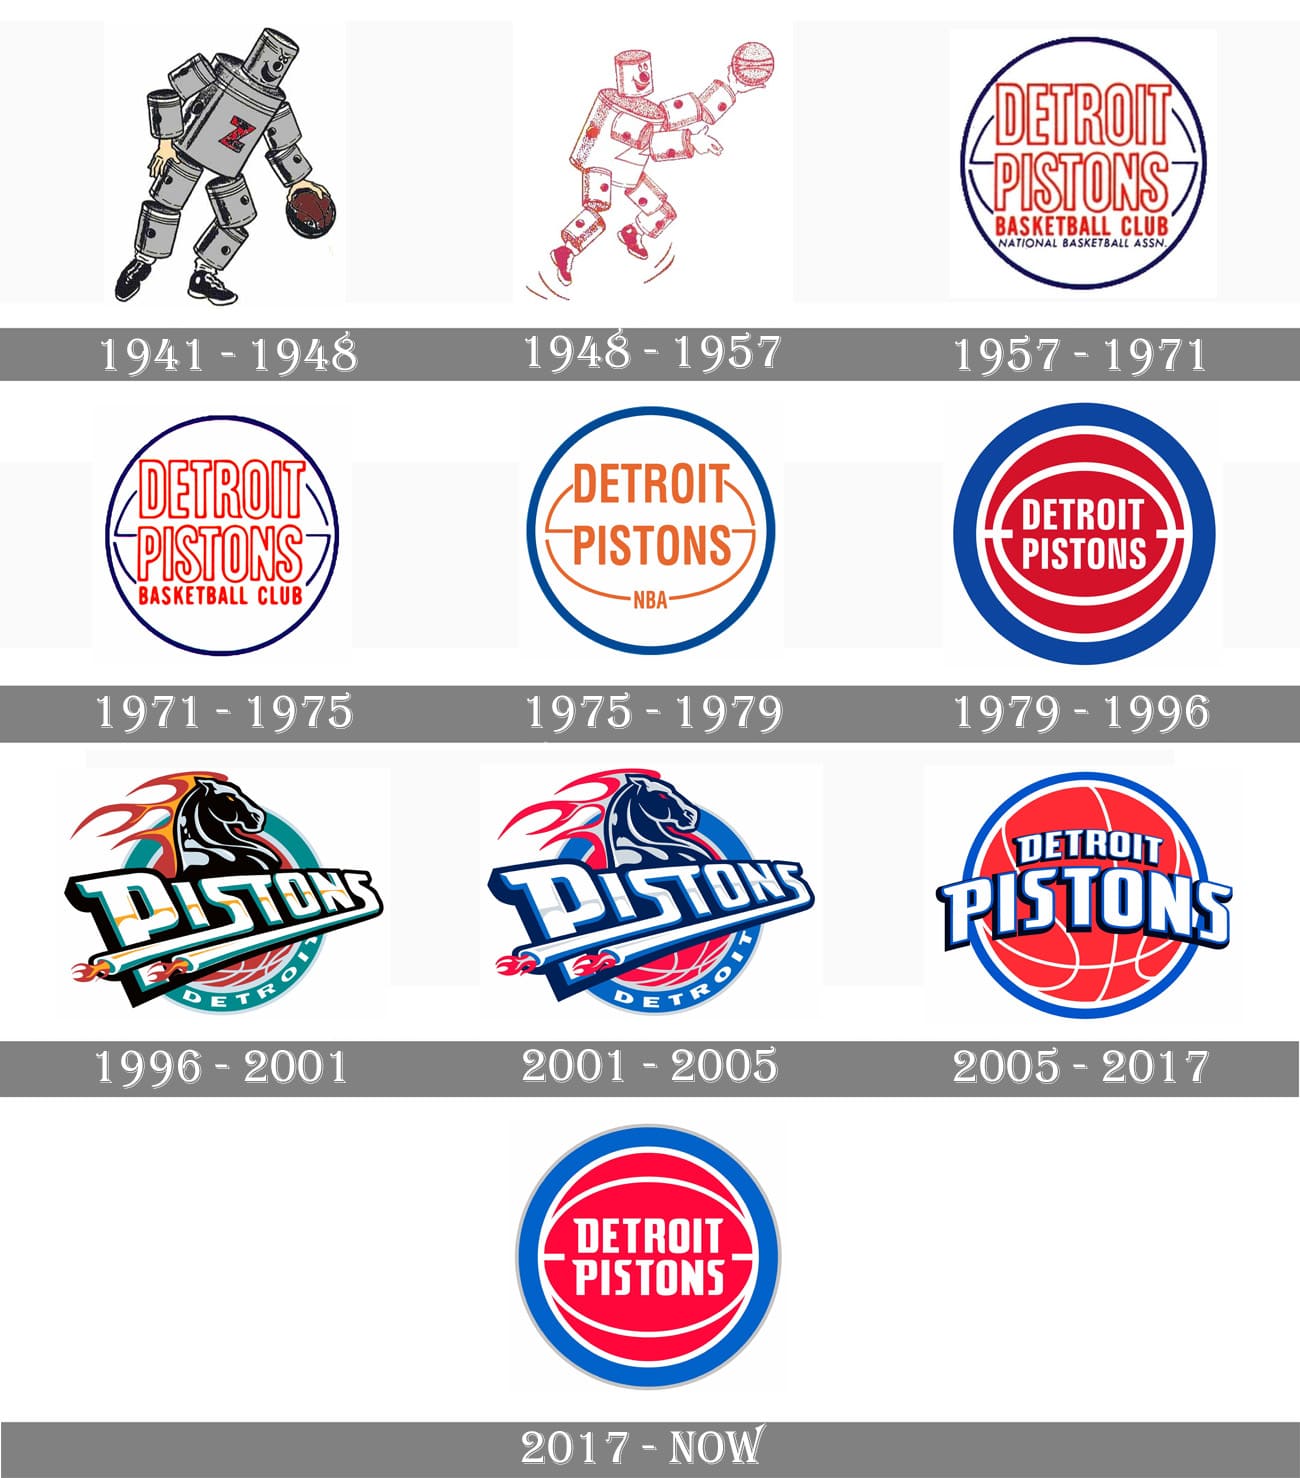 NBA Detroit Pistons Custom Name Number Vintage 90s Jersey Zip Up